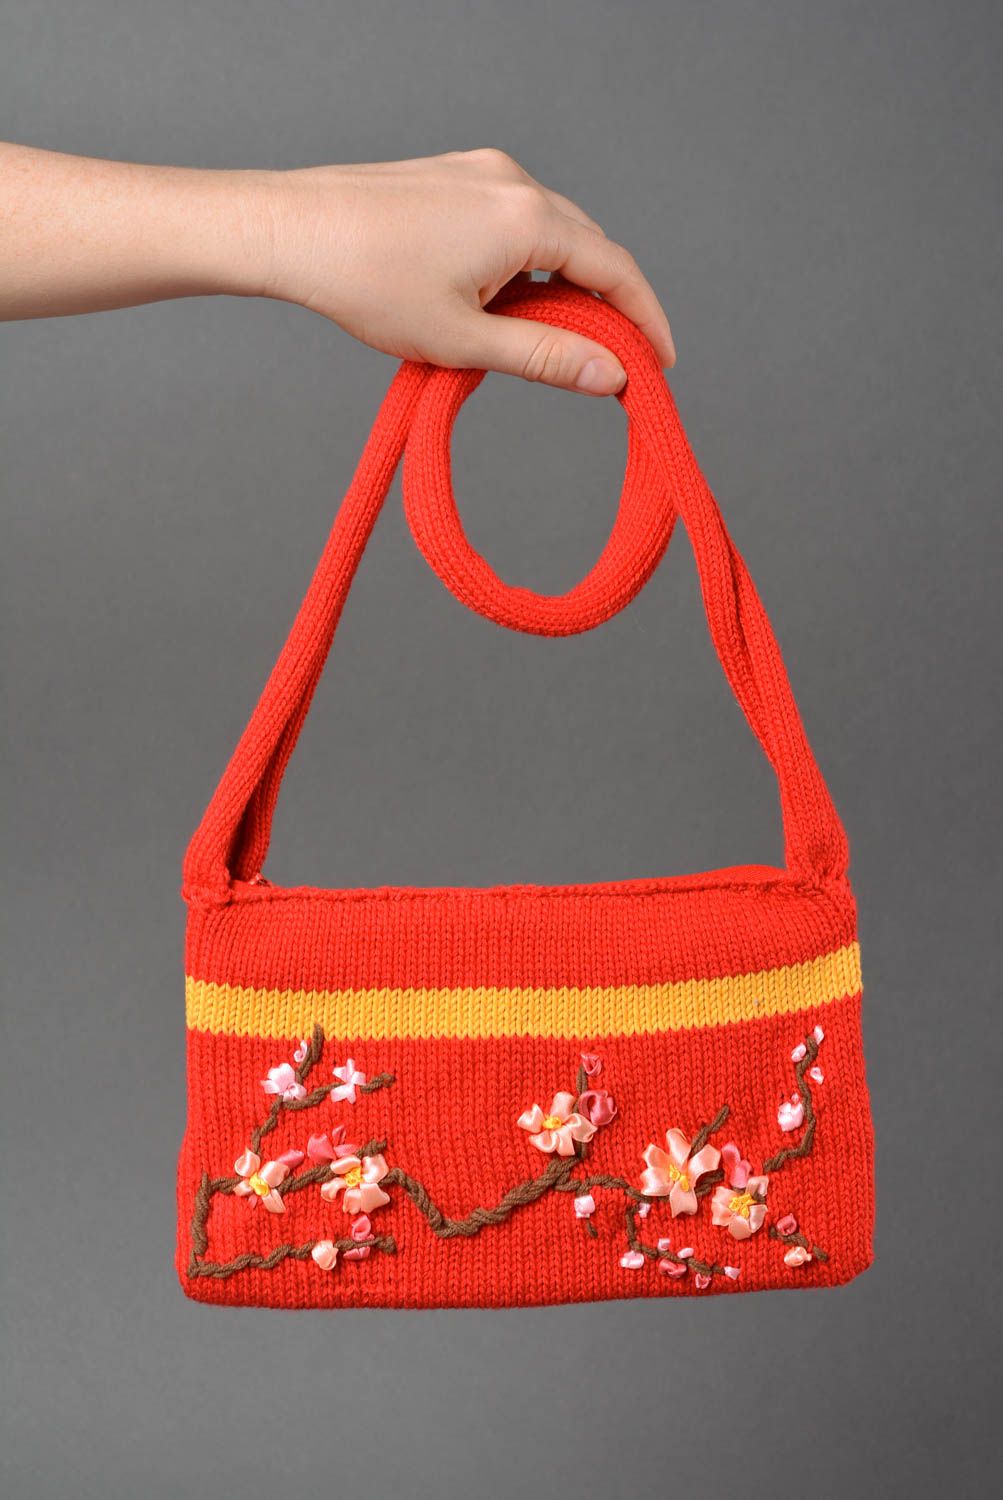 Handmade knitted purse red fabric shoulder bag designer women accessories photo 3